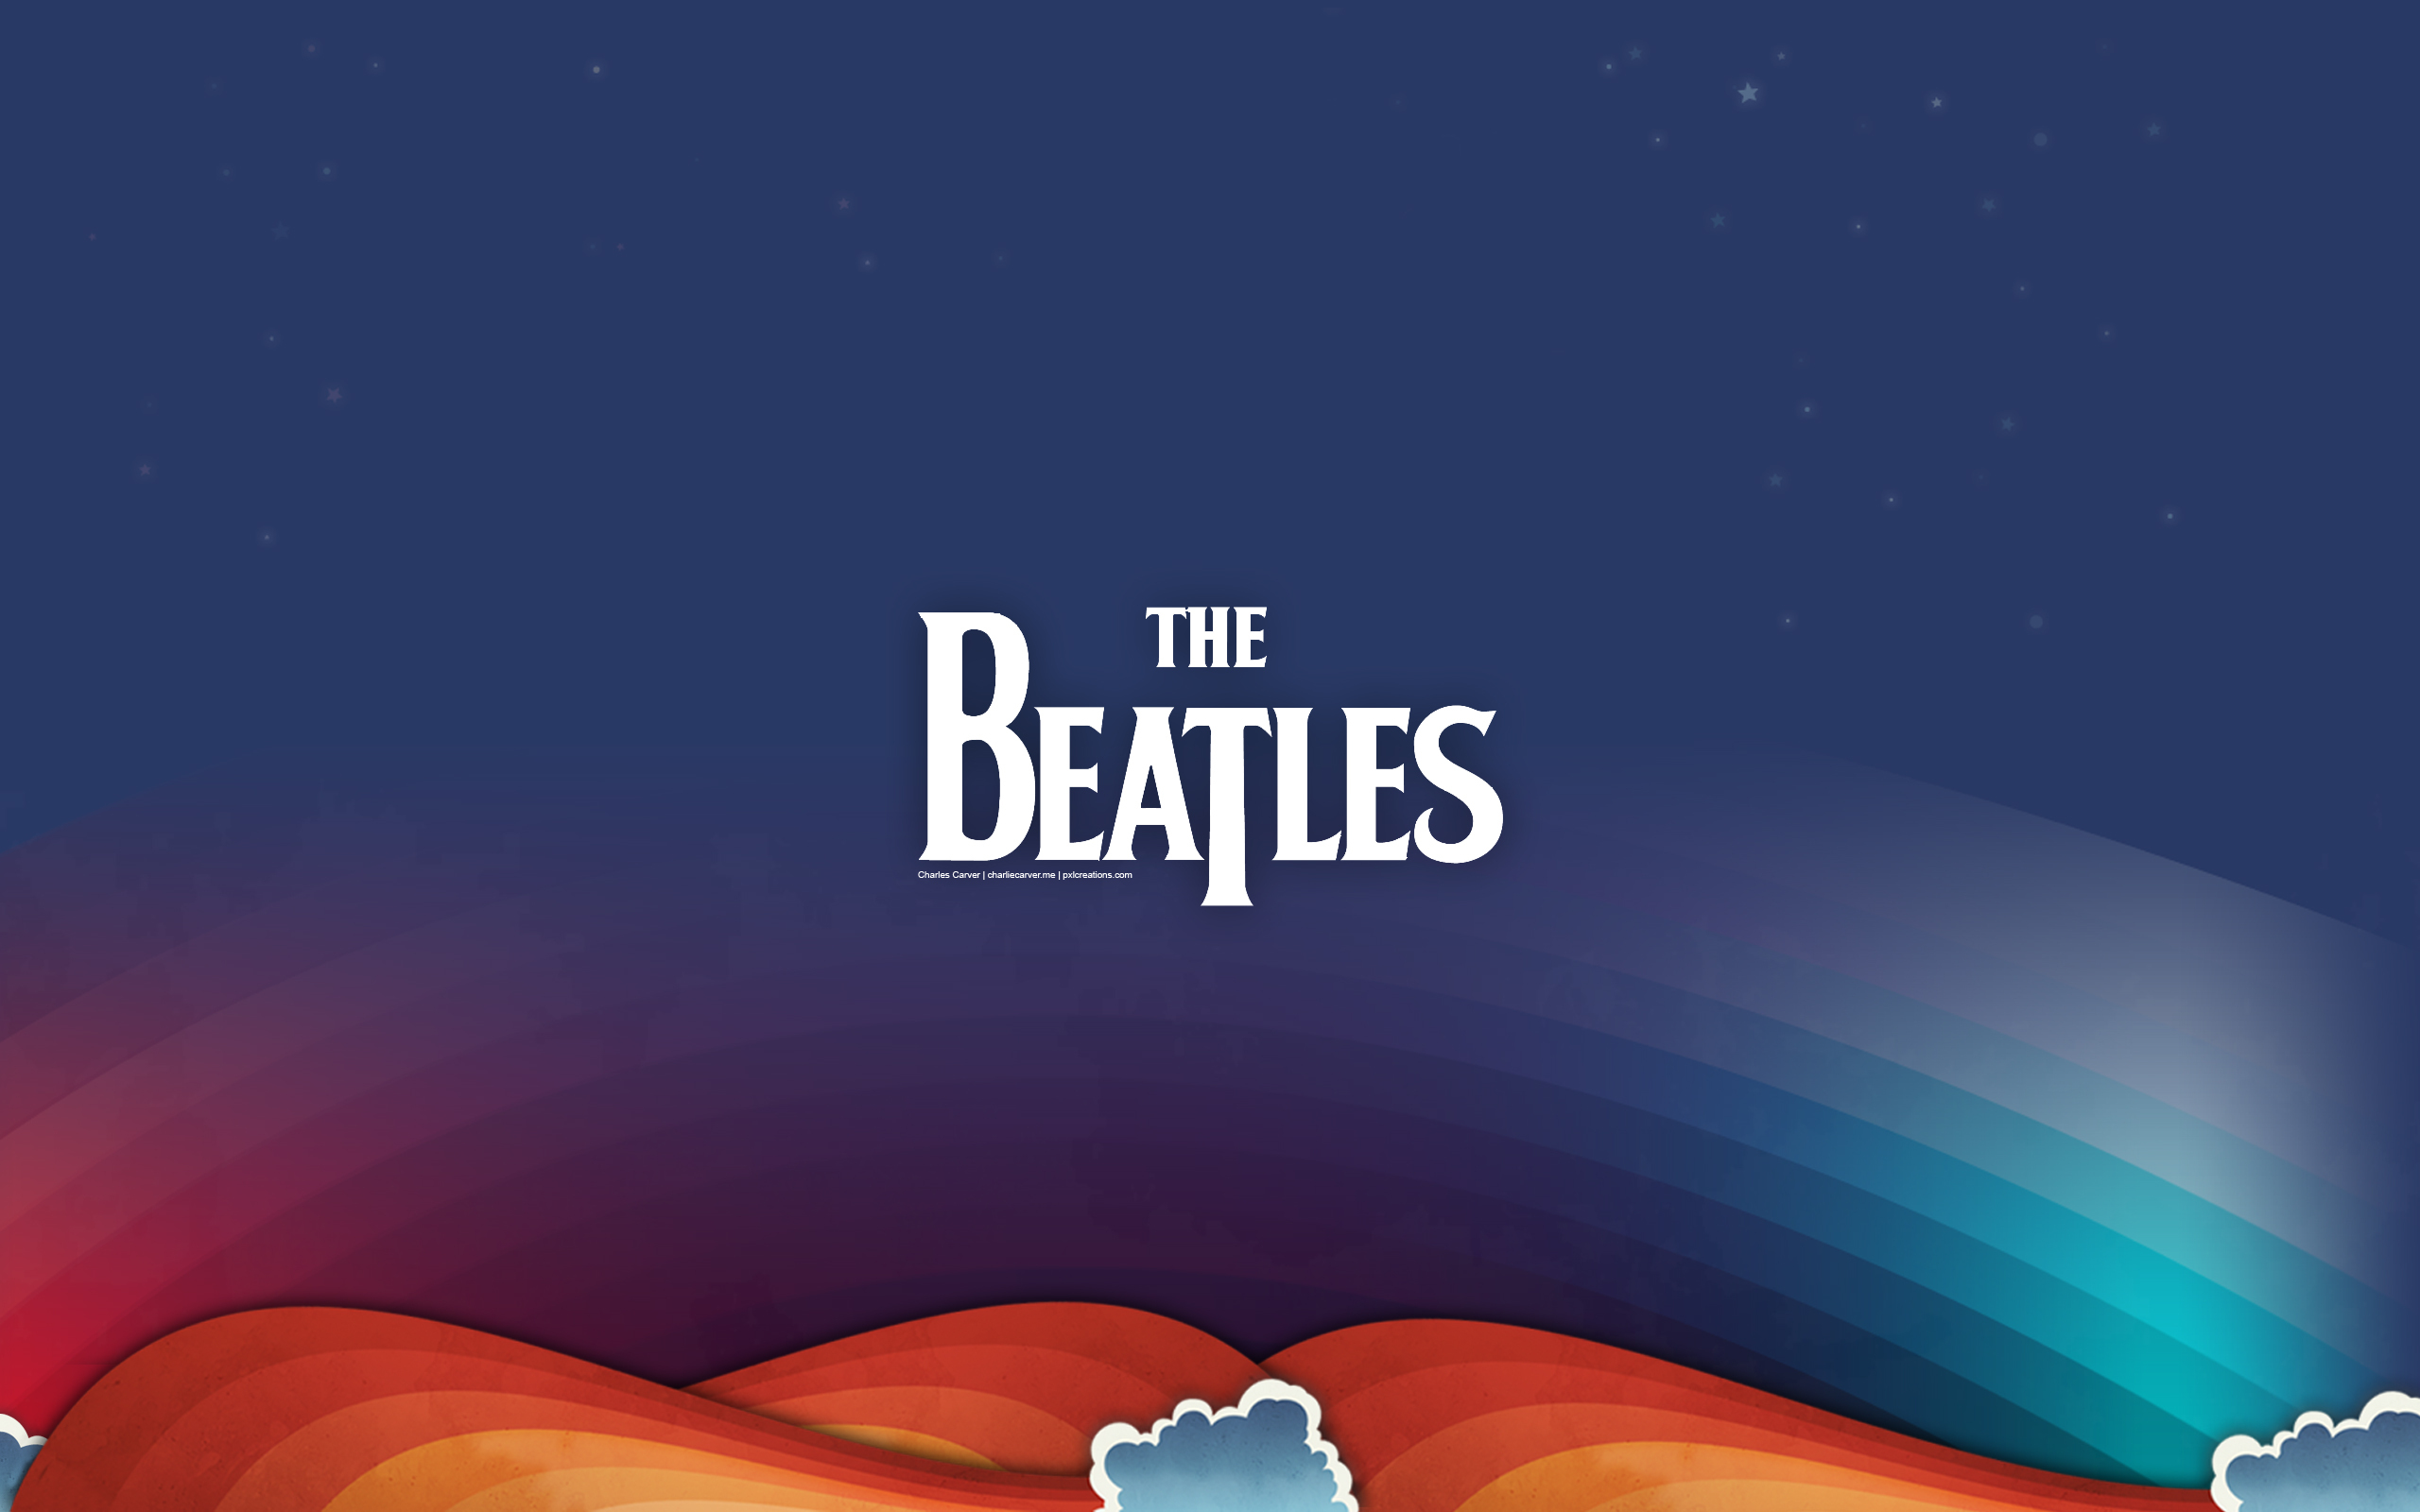 General 2560x1600 The Beatles John Lennon George Harrison Ringo Starr Paul McCartney Games posters band